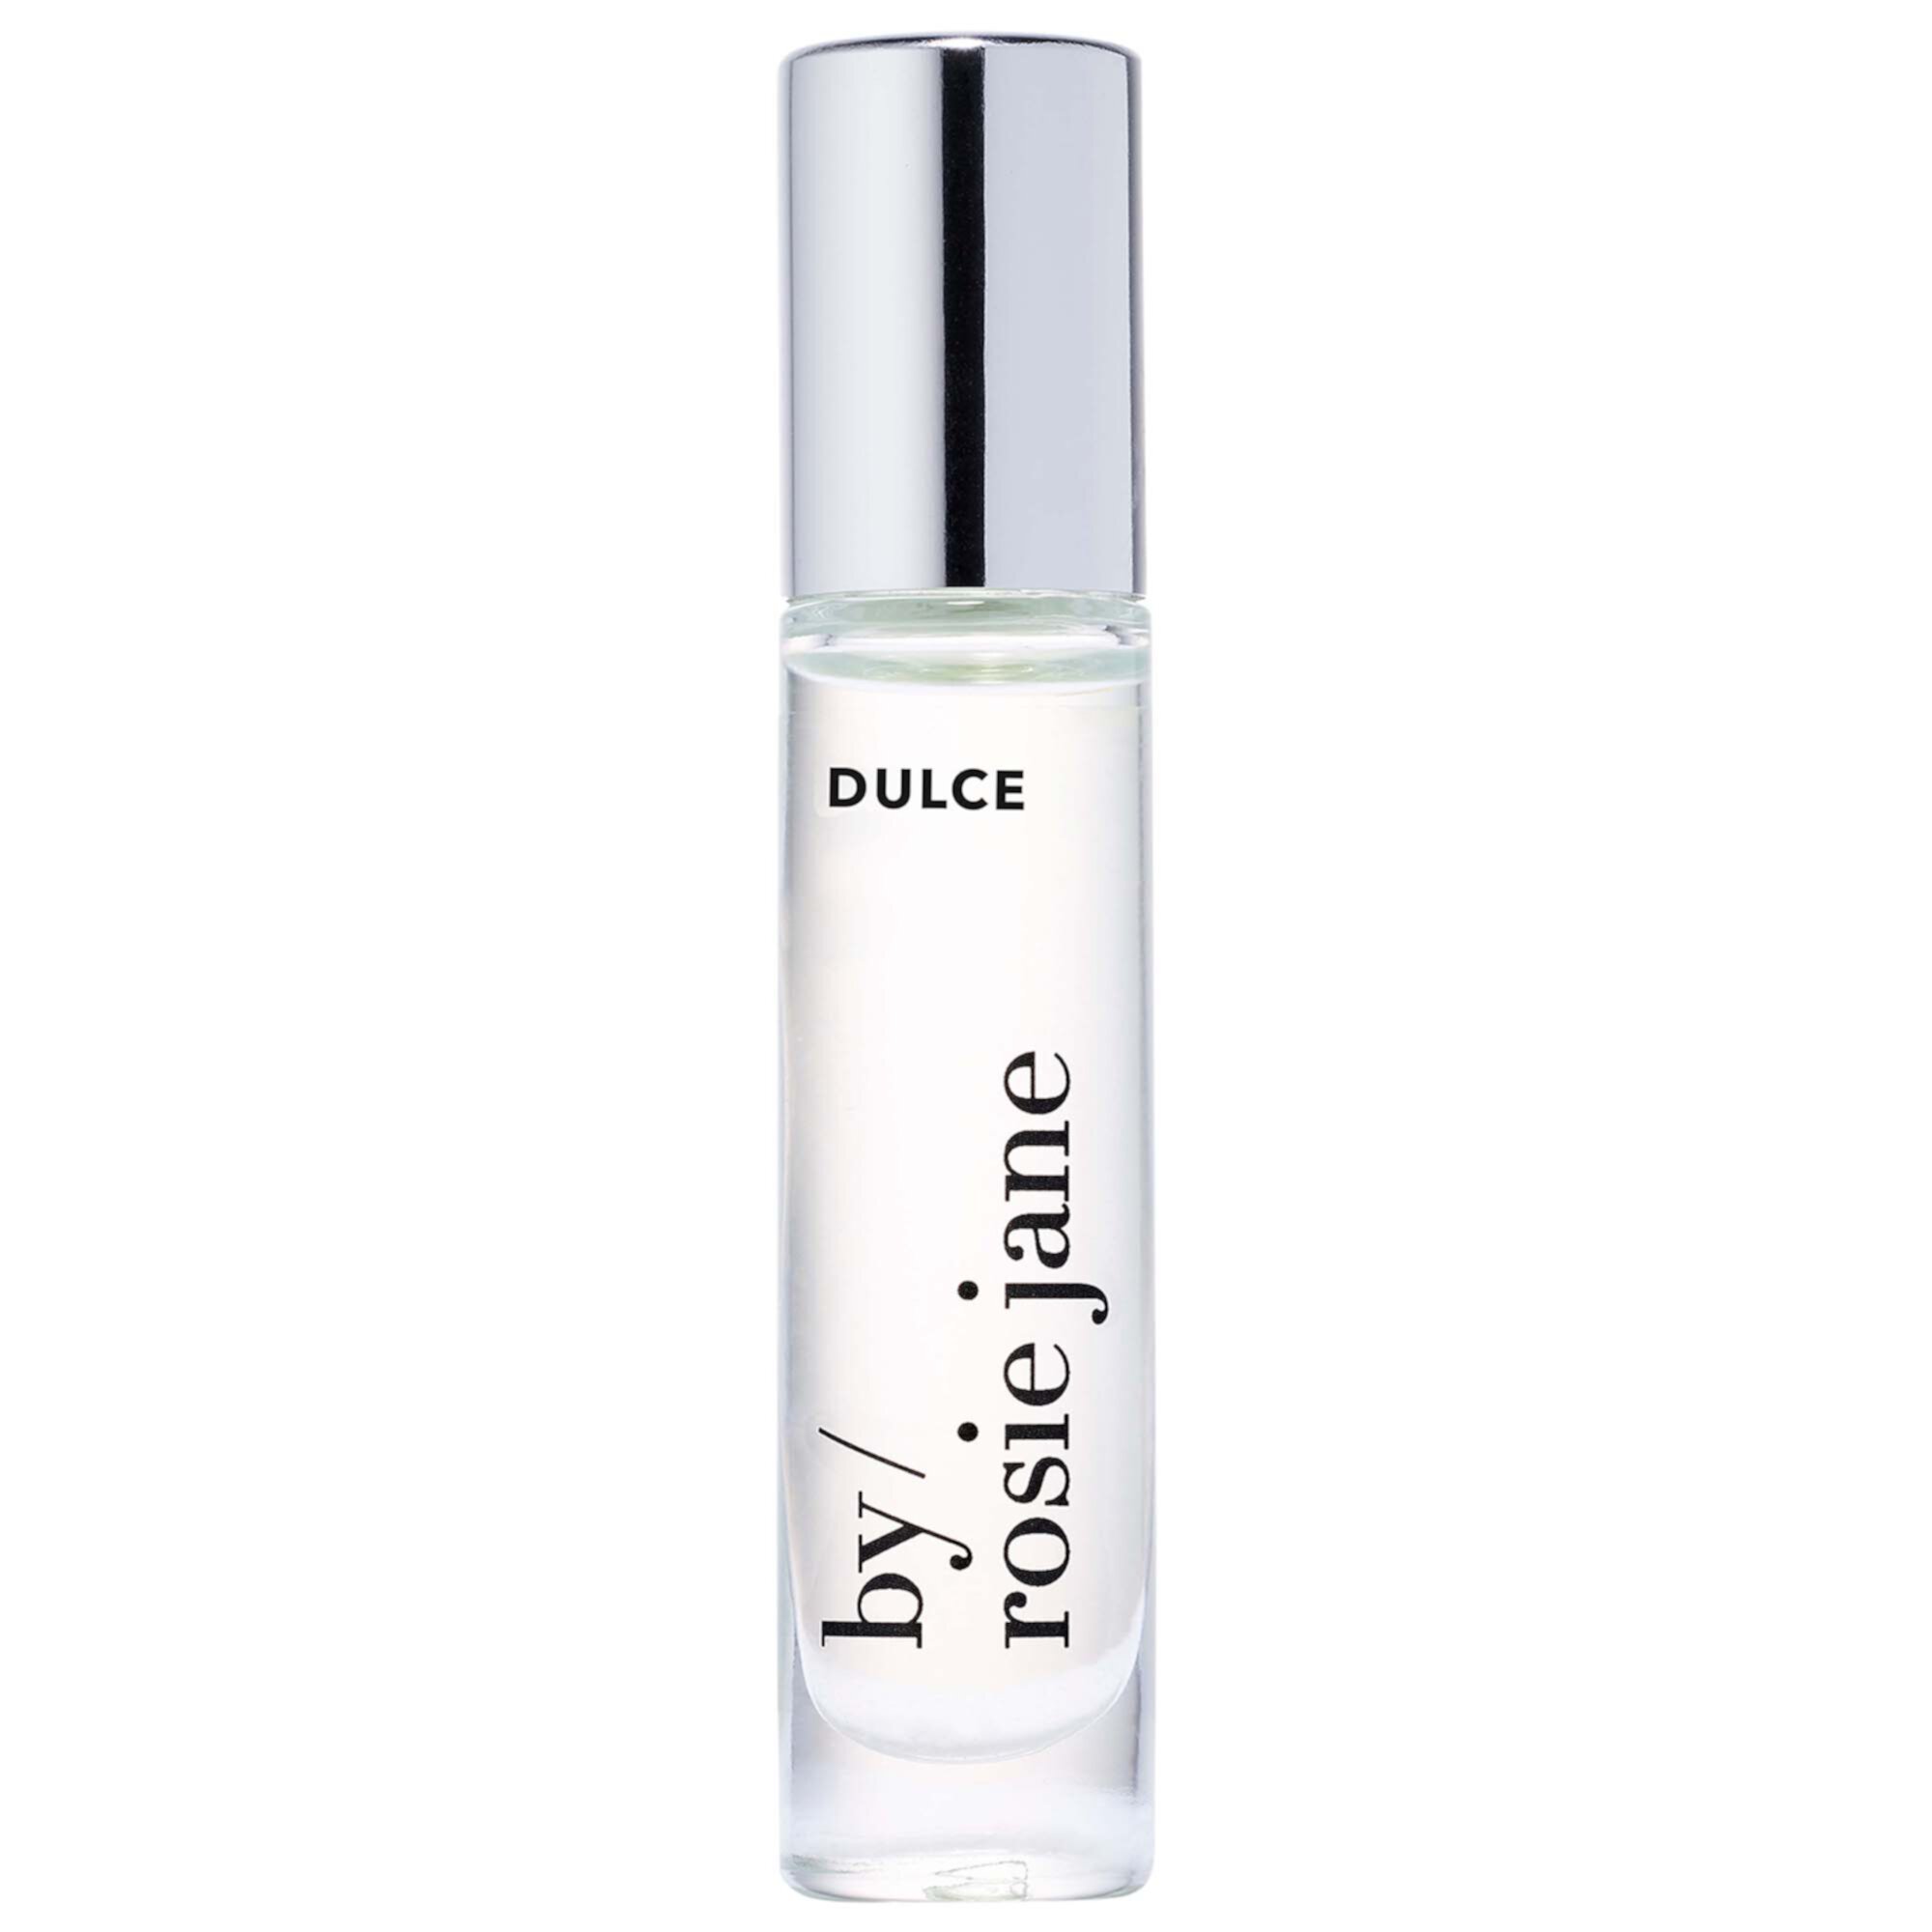 Dulce Perfume Oil By Rosie Jane